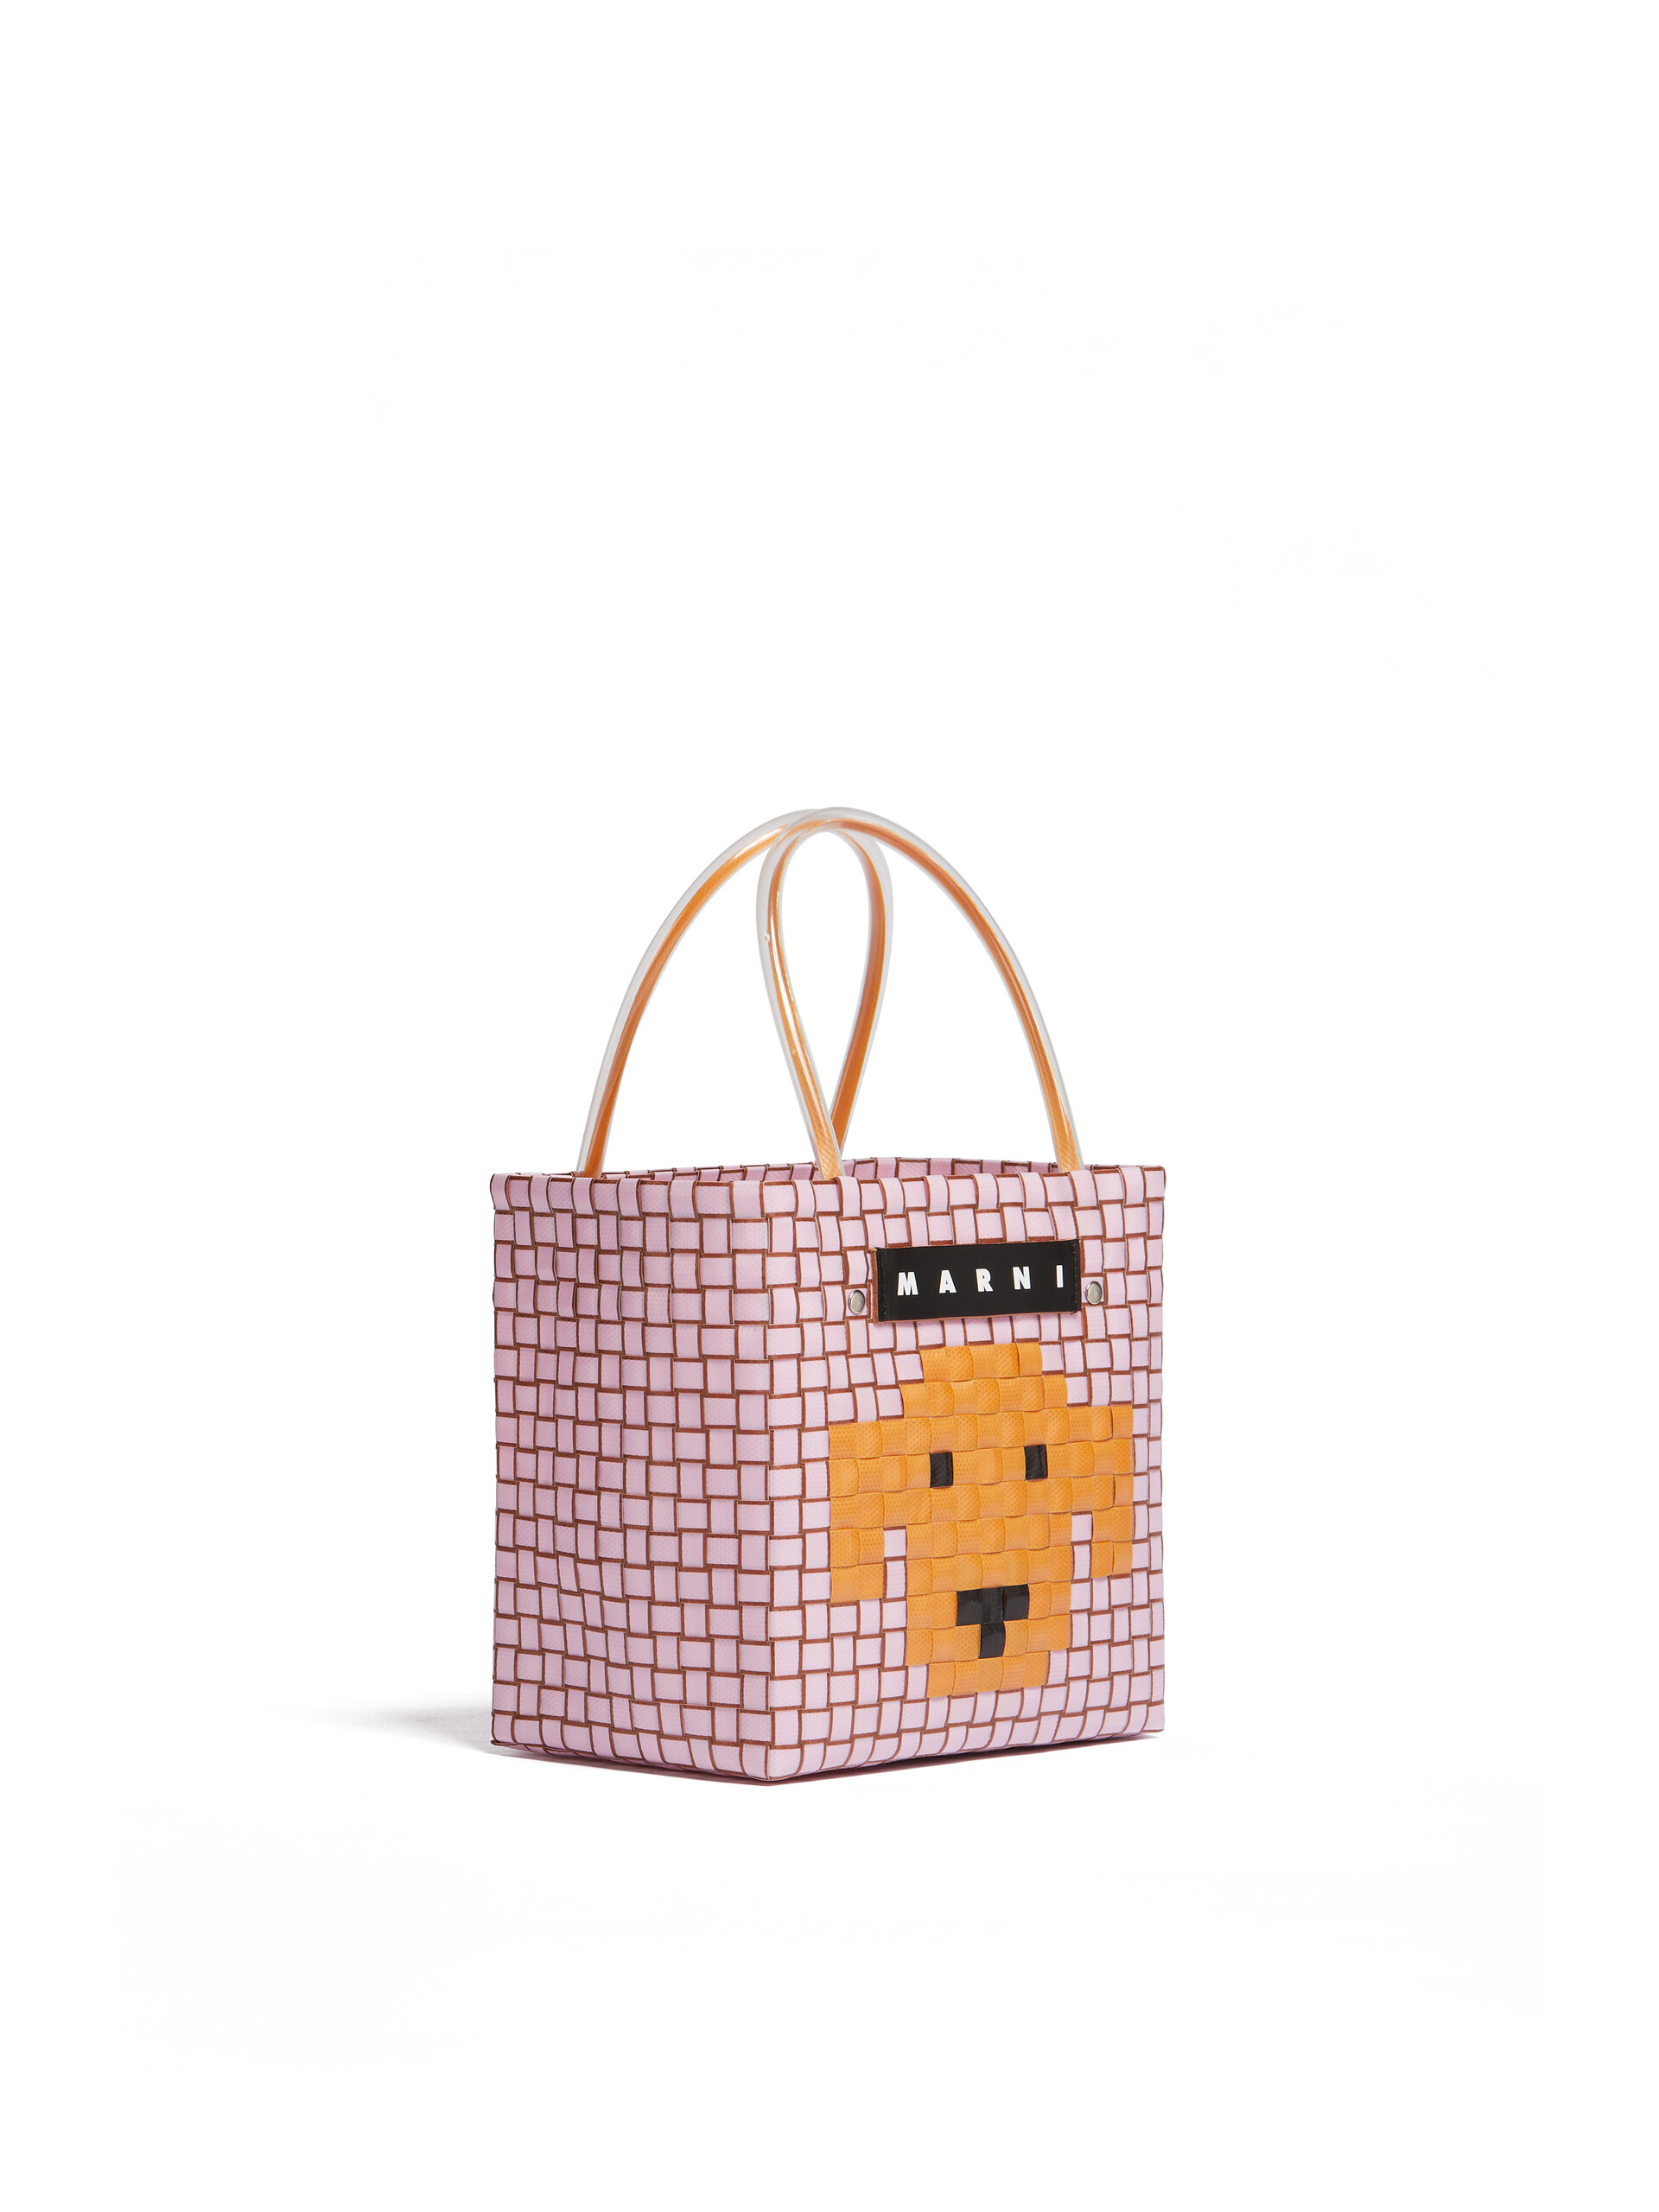 MARNI MARKET ANIMAL BASKET Tasche in Hellrosa - Shopper - Image 2